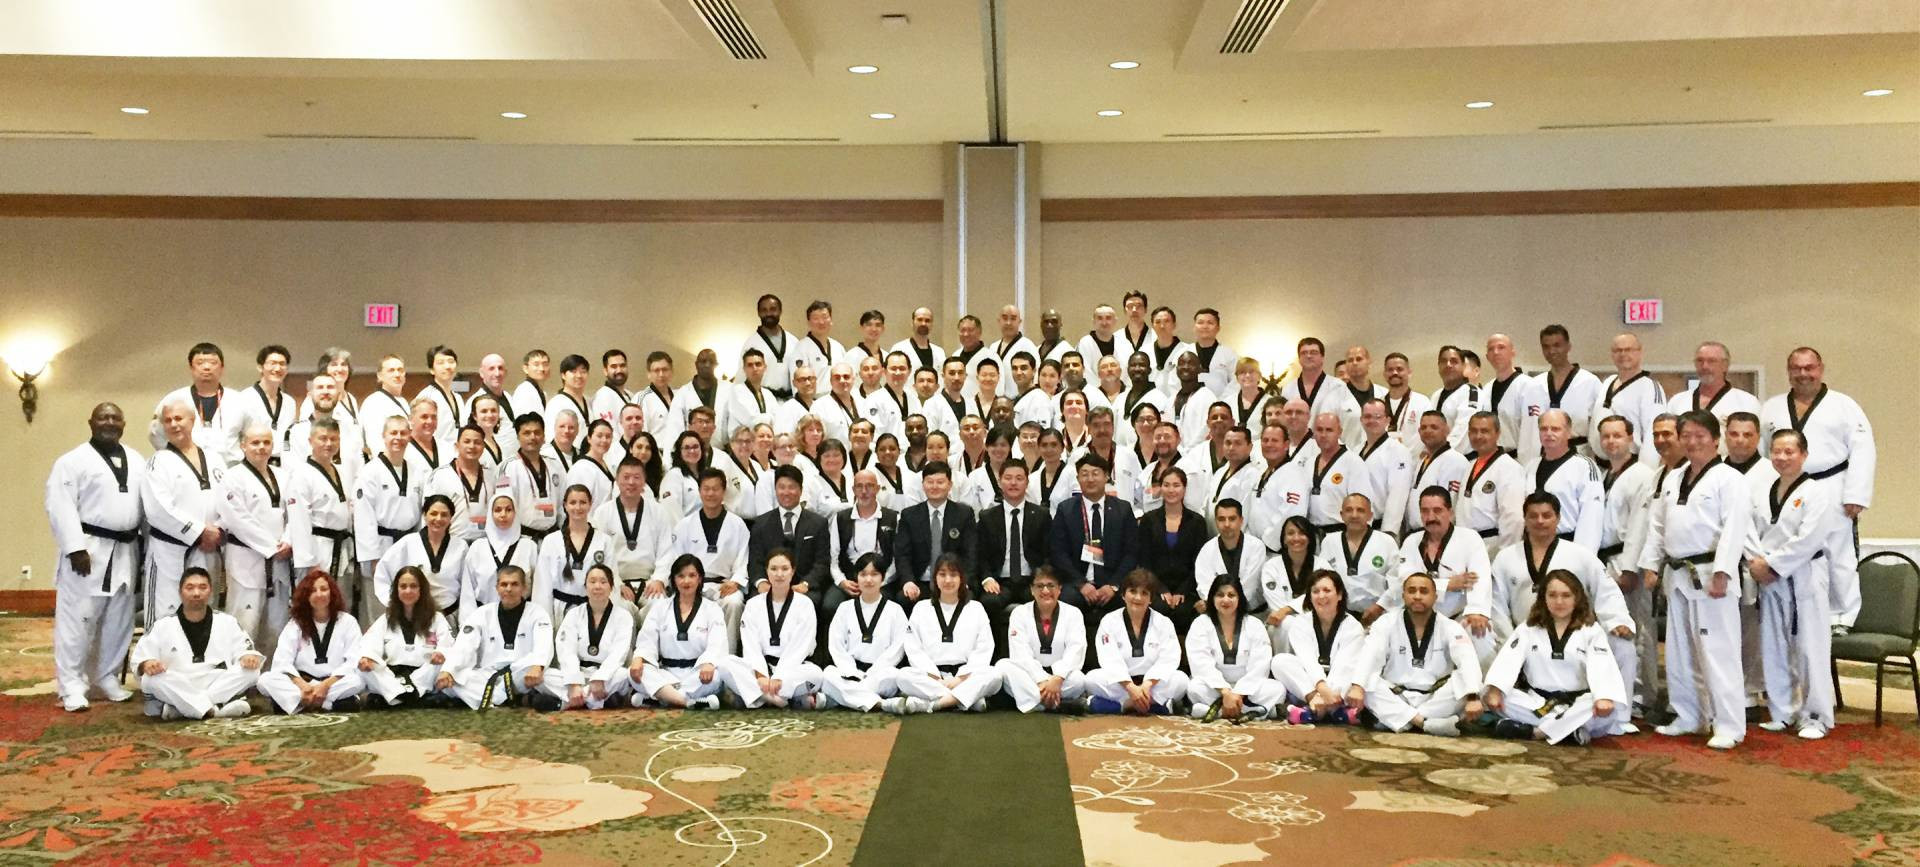 Taekwondo Canada hosted the World Taekwondo International Referee Seminars and International Refresher Courses in Burnaby ©Taekwondo Canada